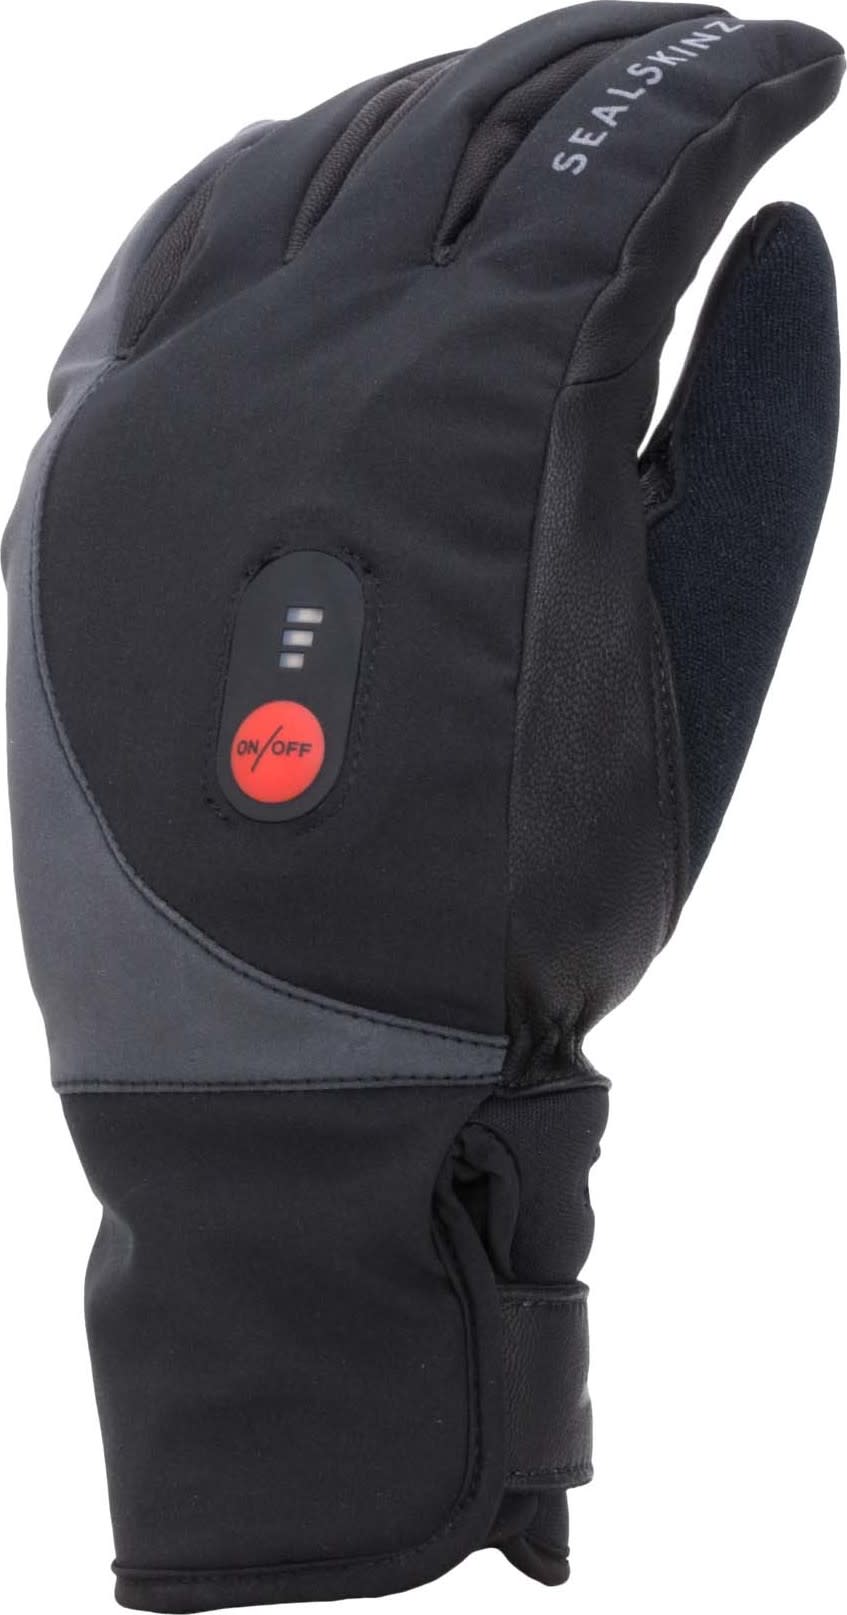 SealSkinz Waterproof Heated Cycle Glove Black